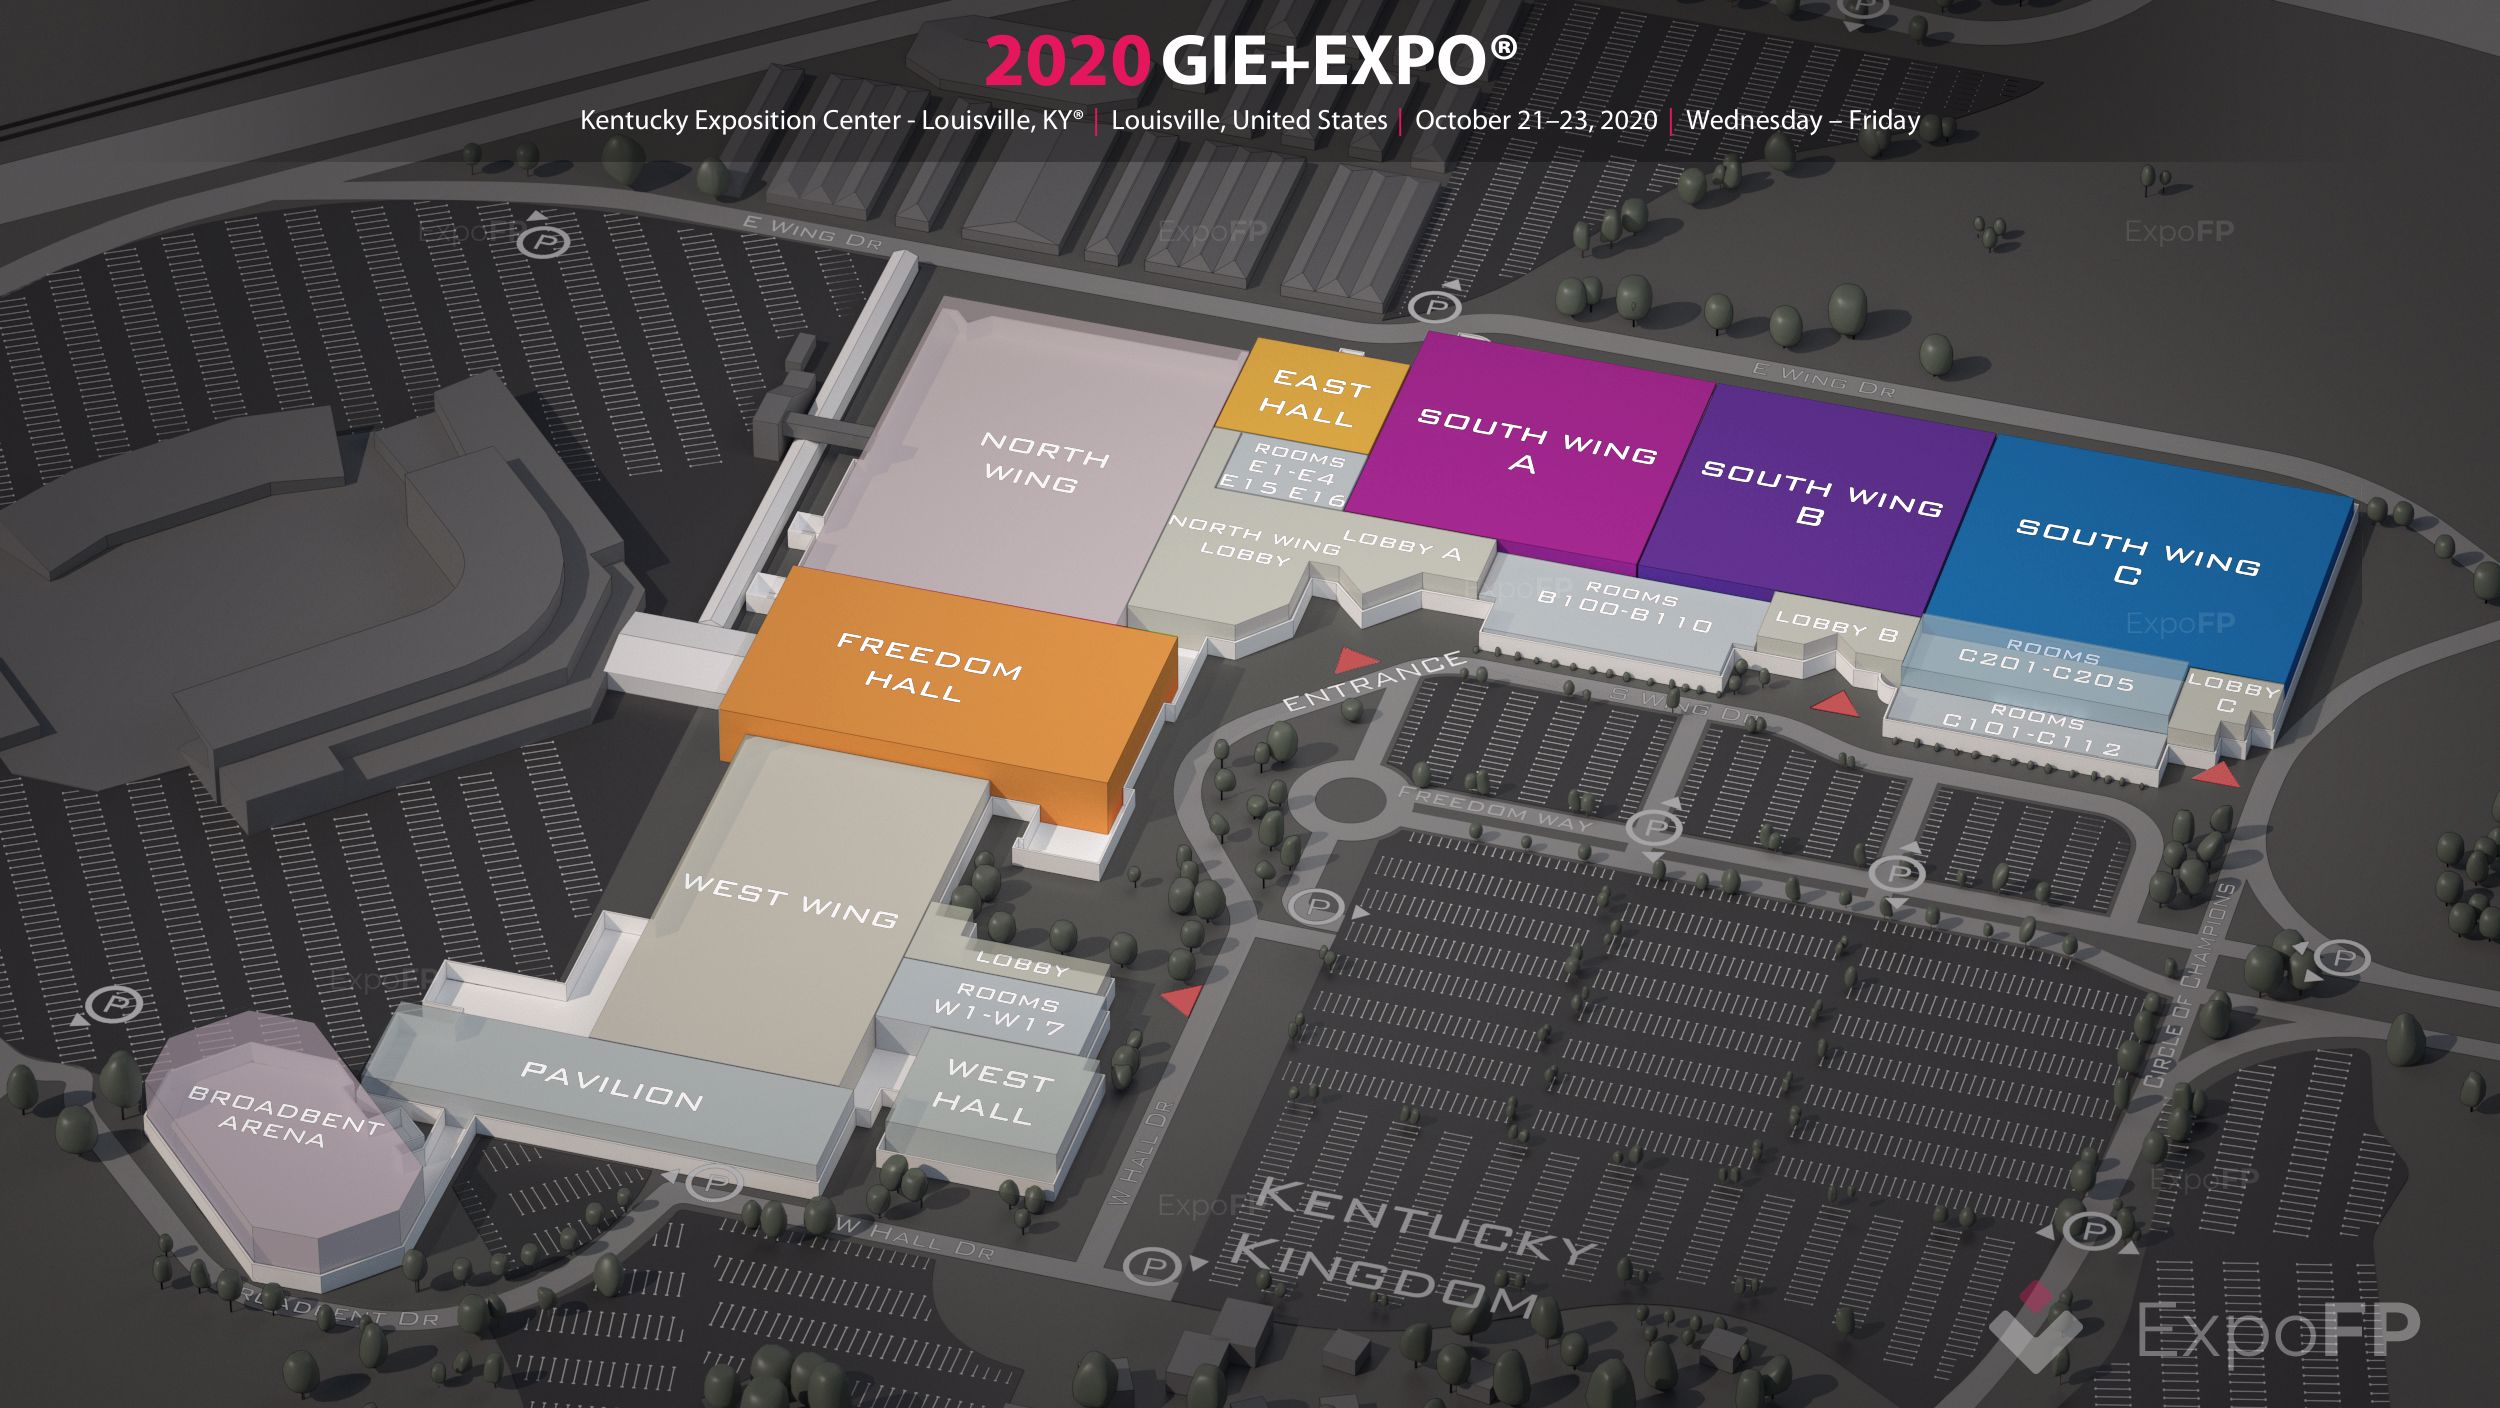 GIE+EXPO 2020 in Kentucky Exposition Center Louisville, KY